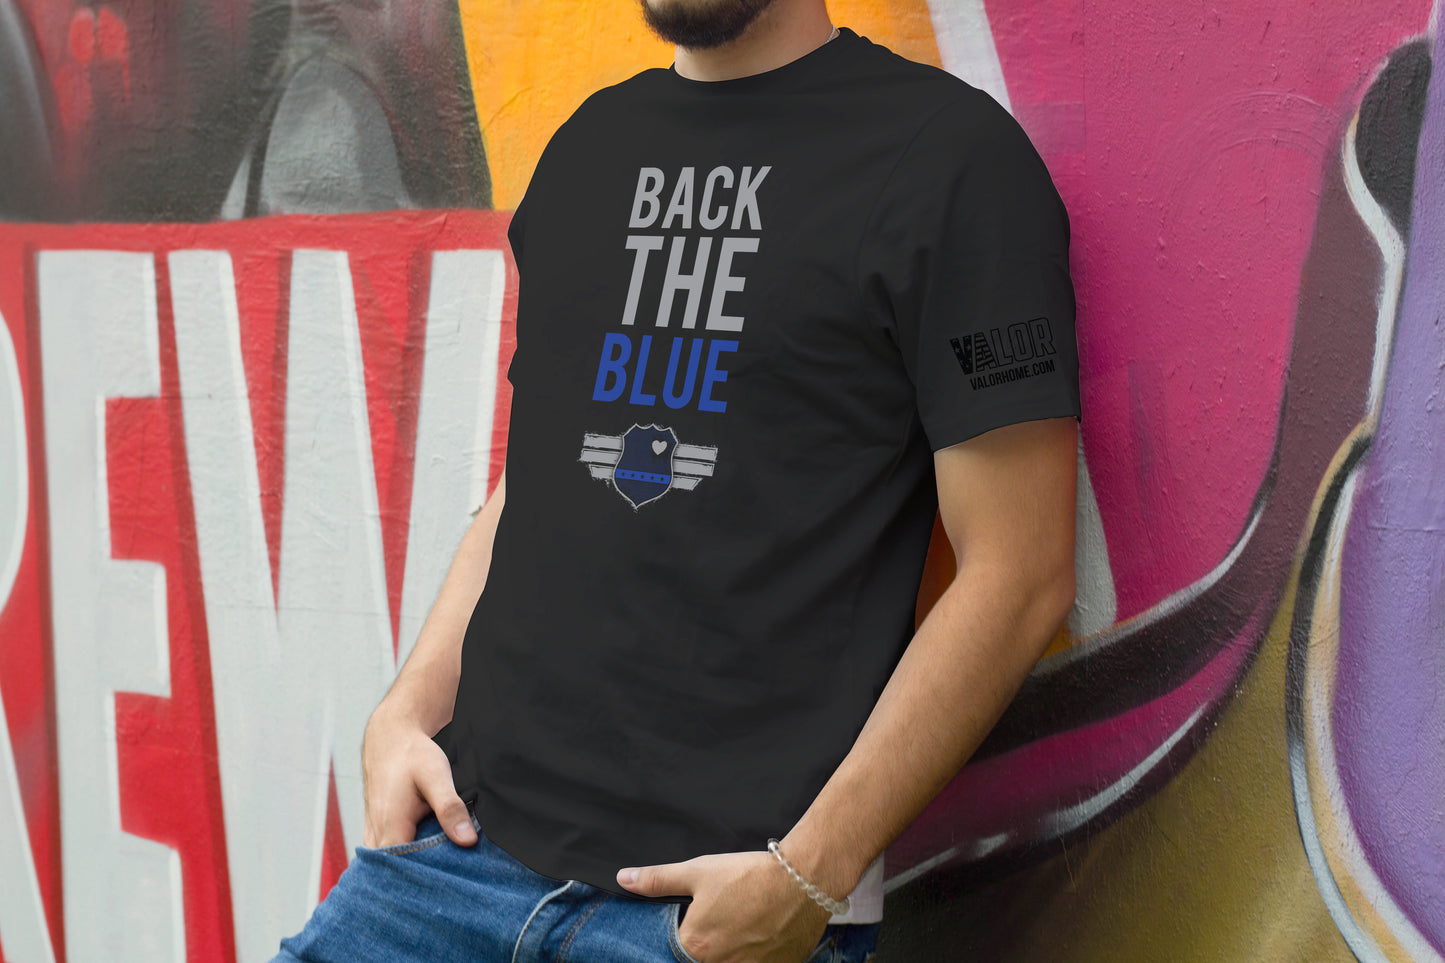 Gentlemen's "Back the Blue" Shirt